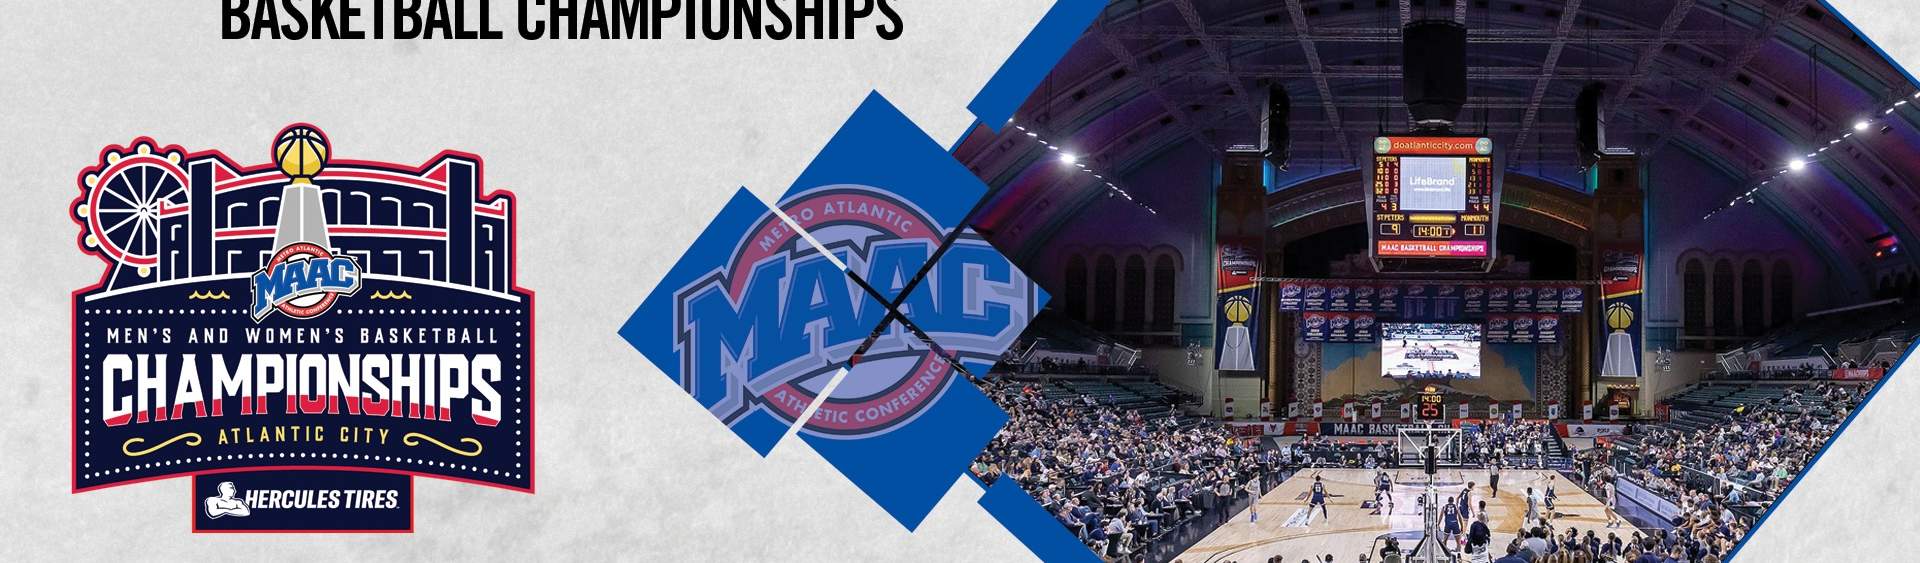 Iona Men's Basketball advances to MAAC Finals